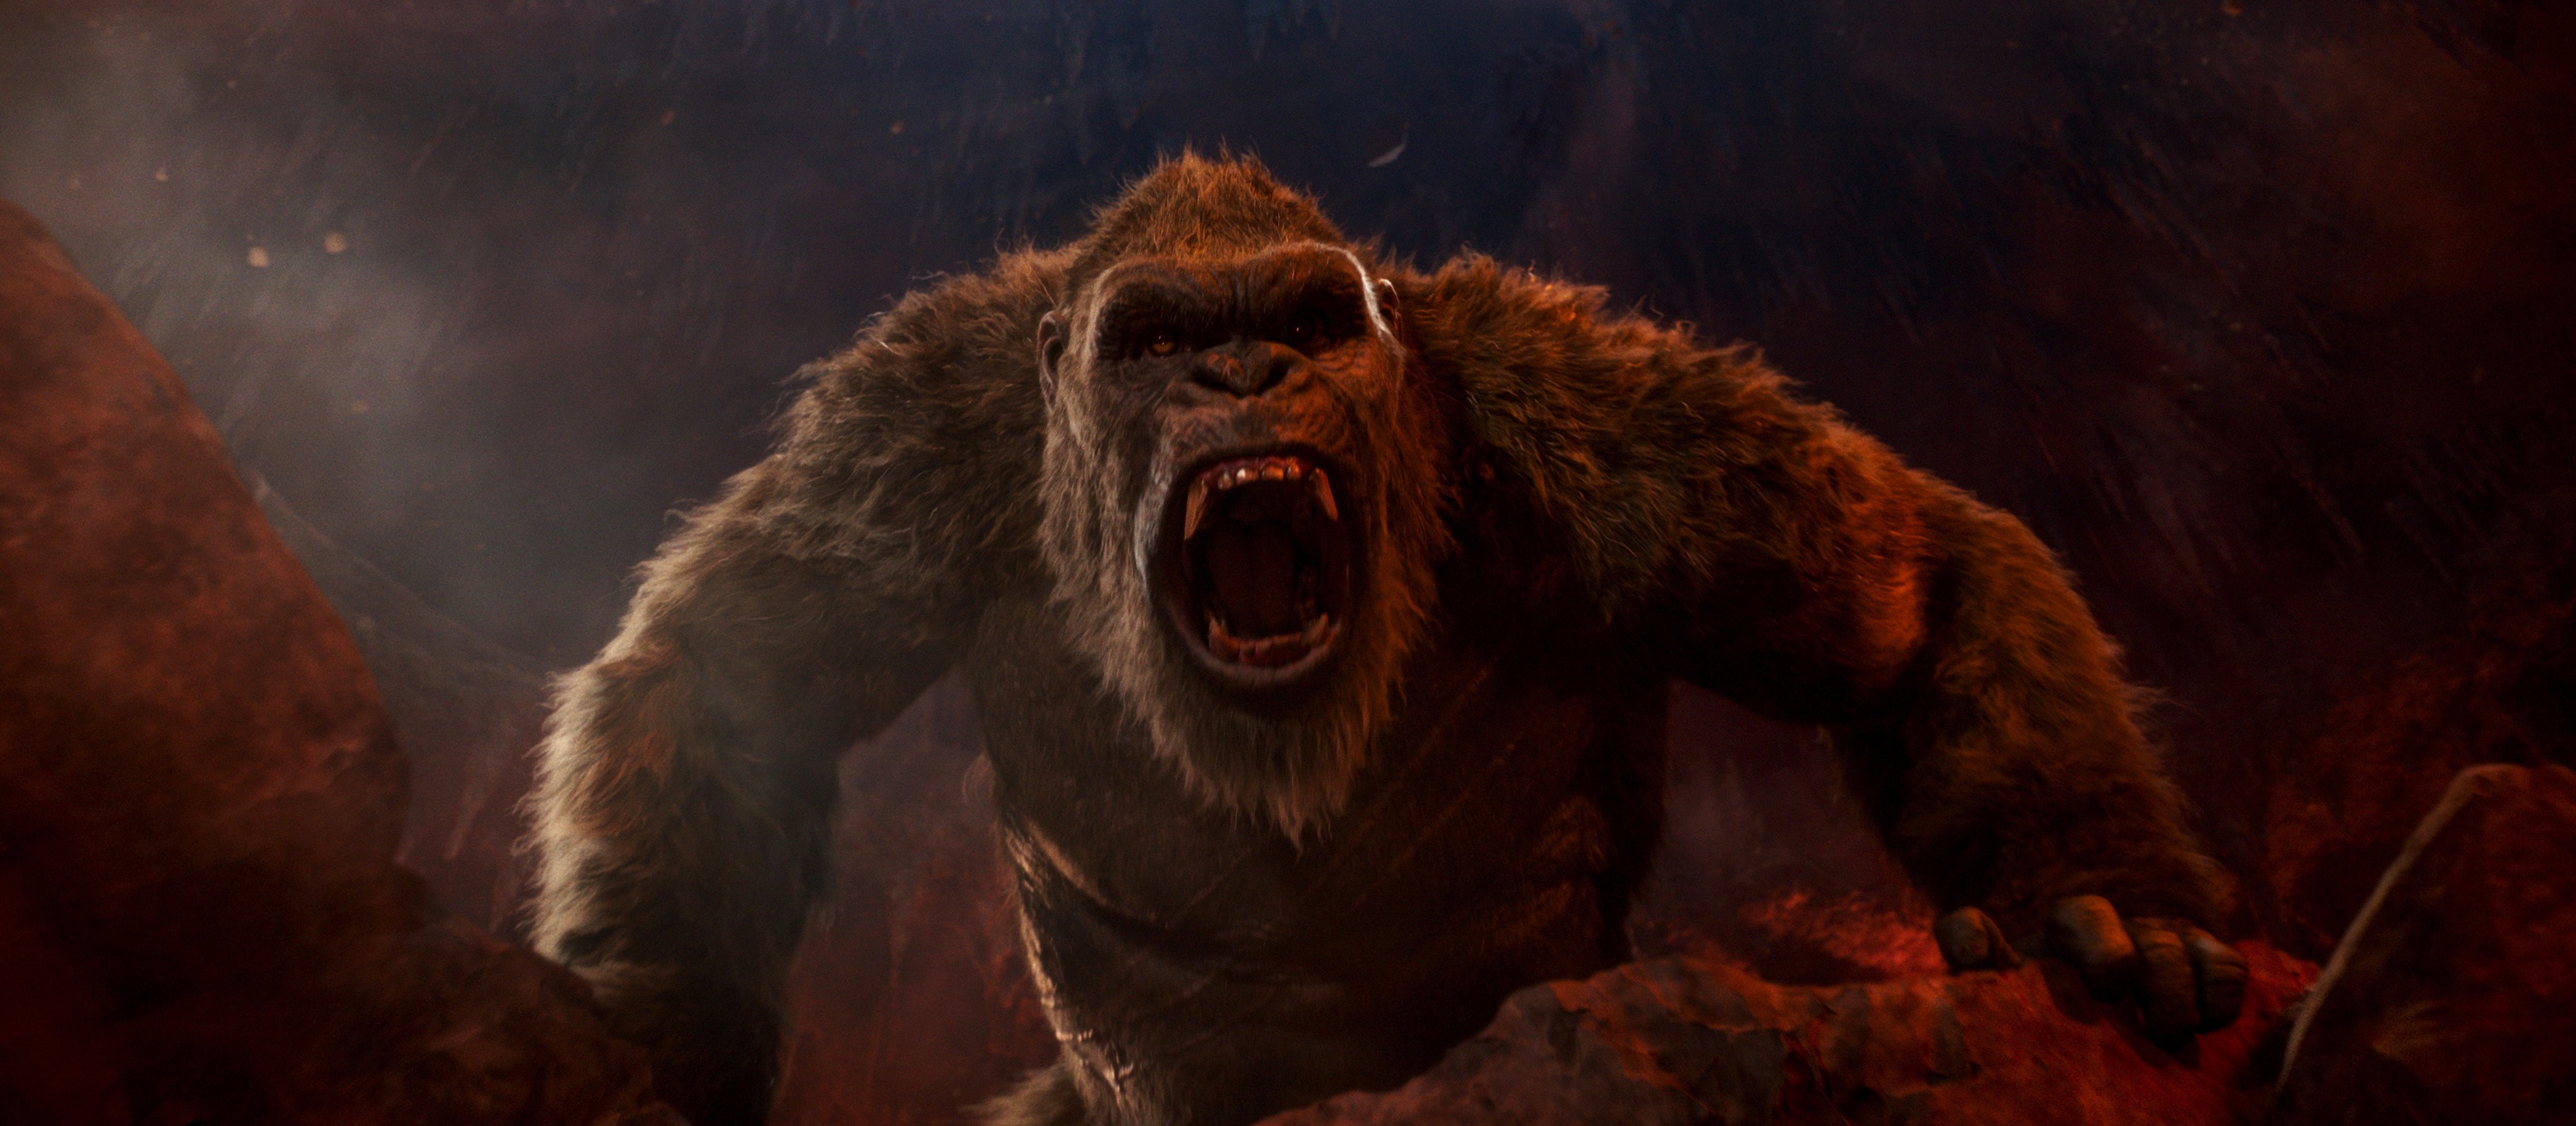 King Kong roars in Godzilla vs. Kong